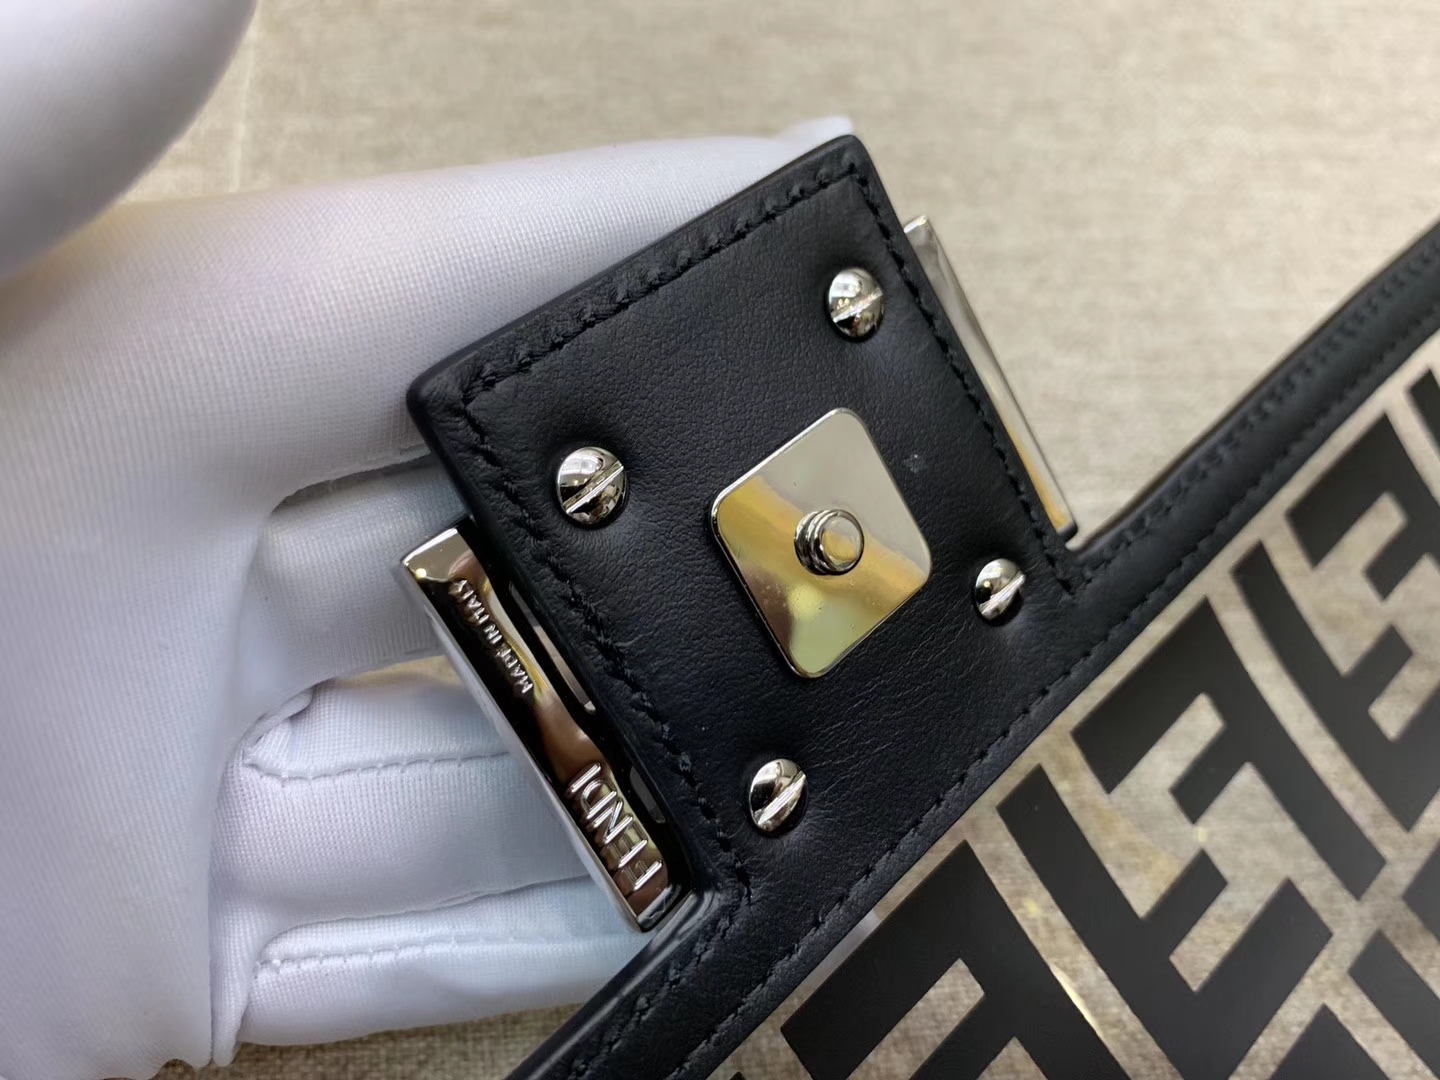 Baguette手袋 全透明的TPU 包身被F 印花覆盖 很契合当下的透明风潮 26cm